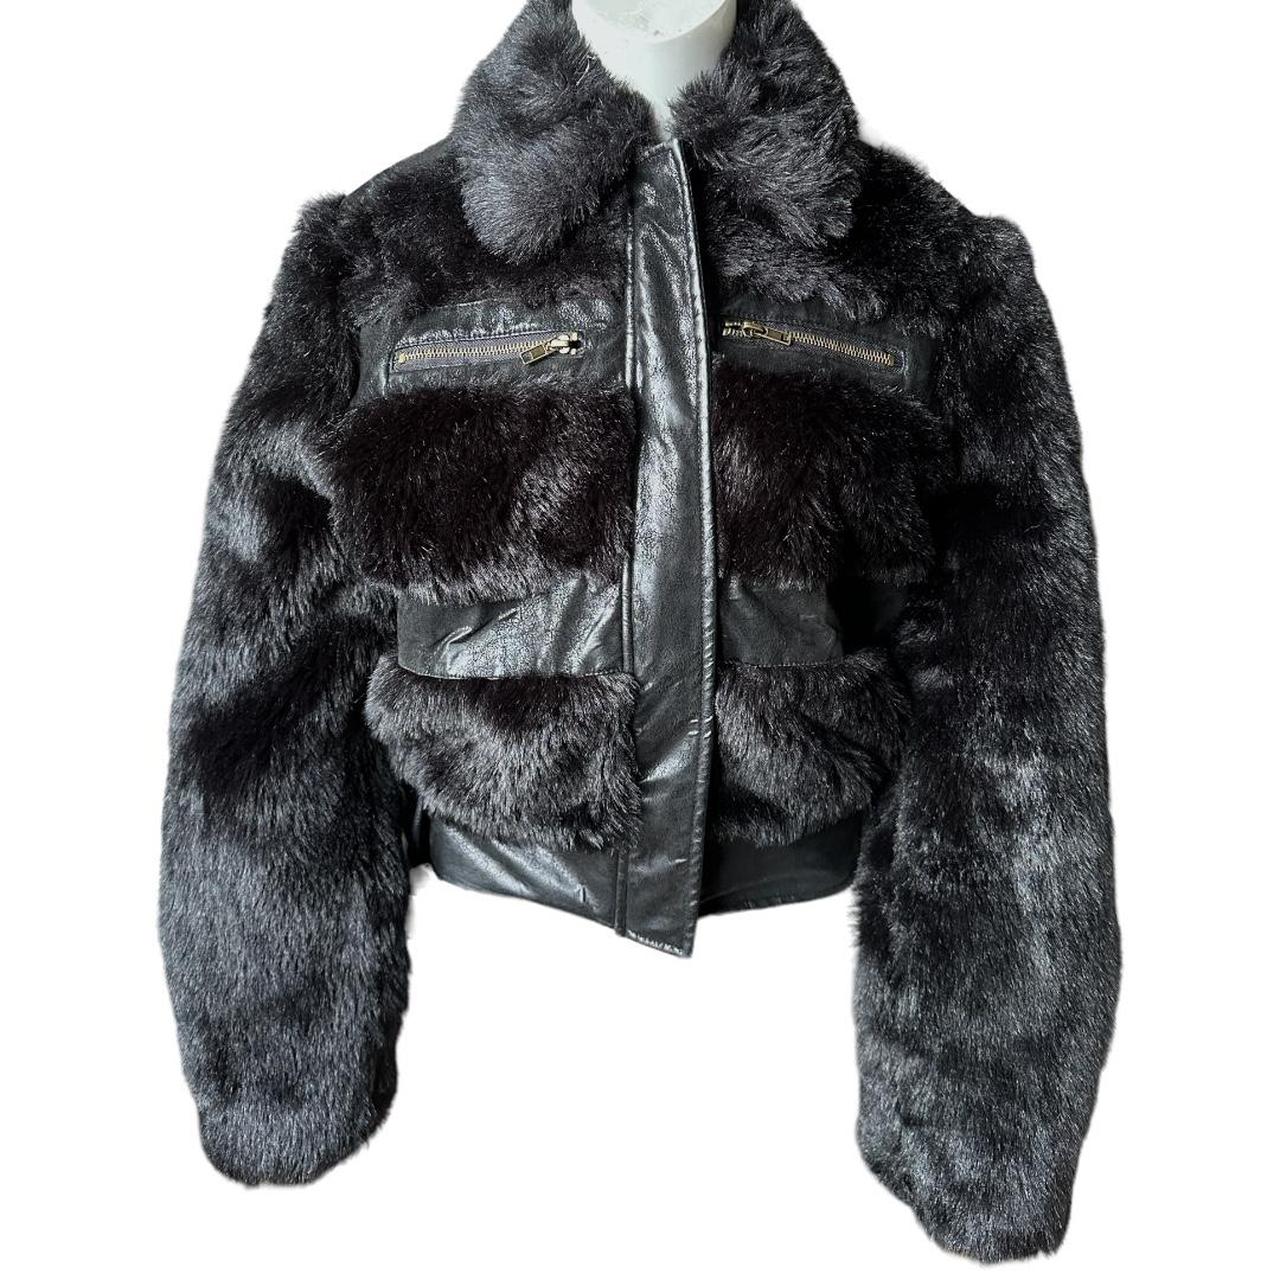 Y2k cropped black fur bomber jacket - Y2k cropped... - Depop